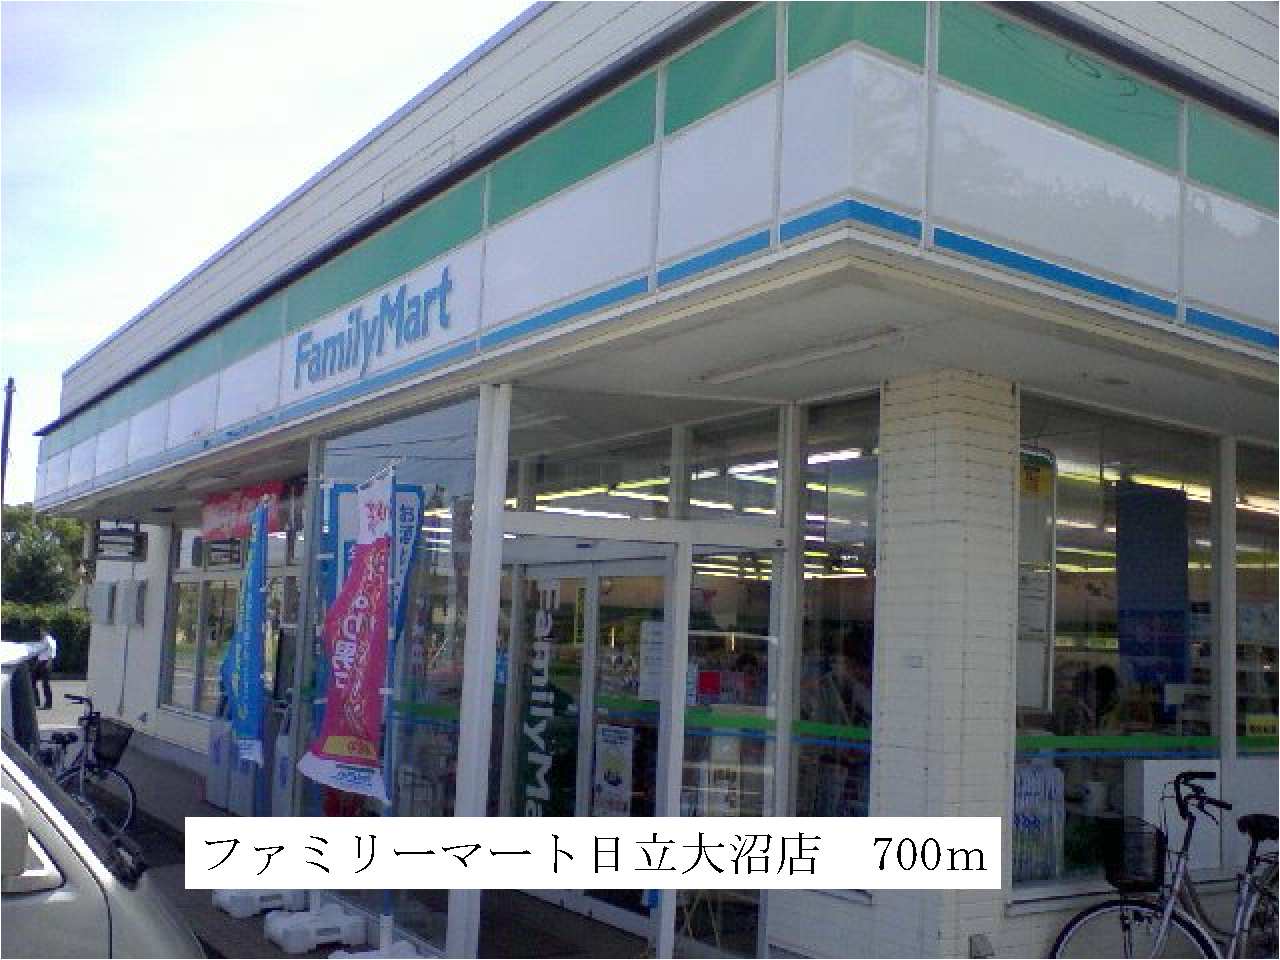 Convenience store. 700m to FamilyMart Hitachi Onuma store (convenience store)